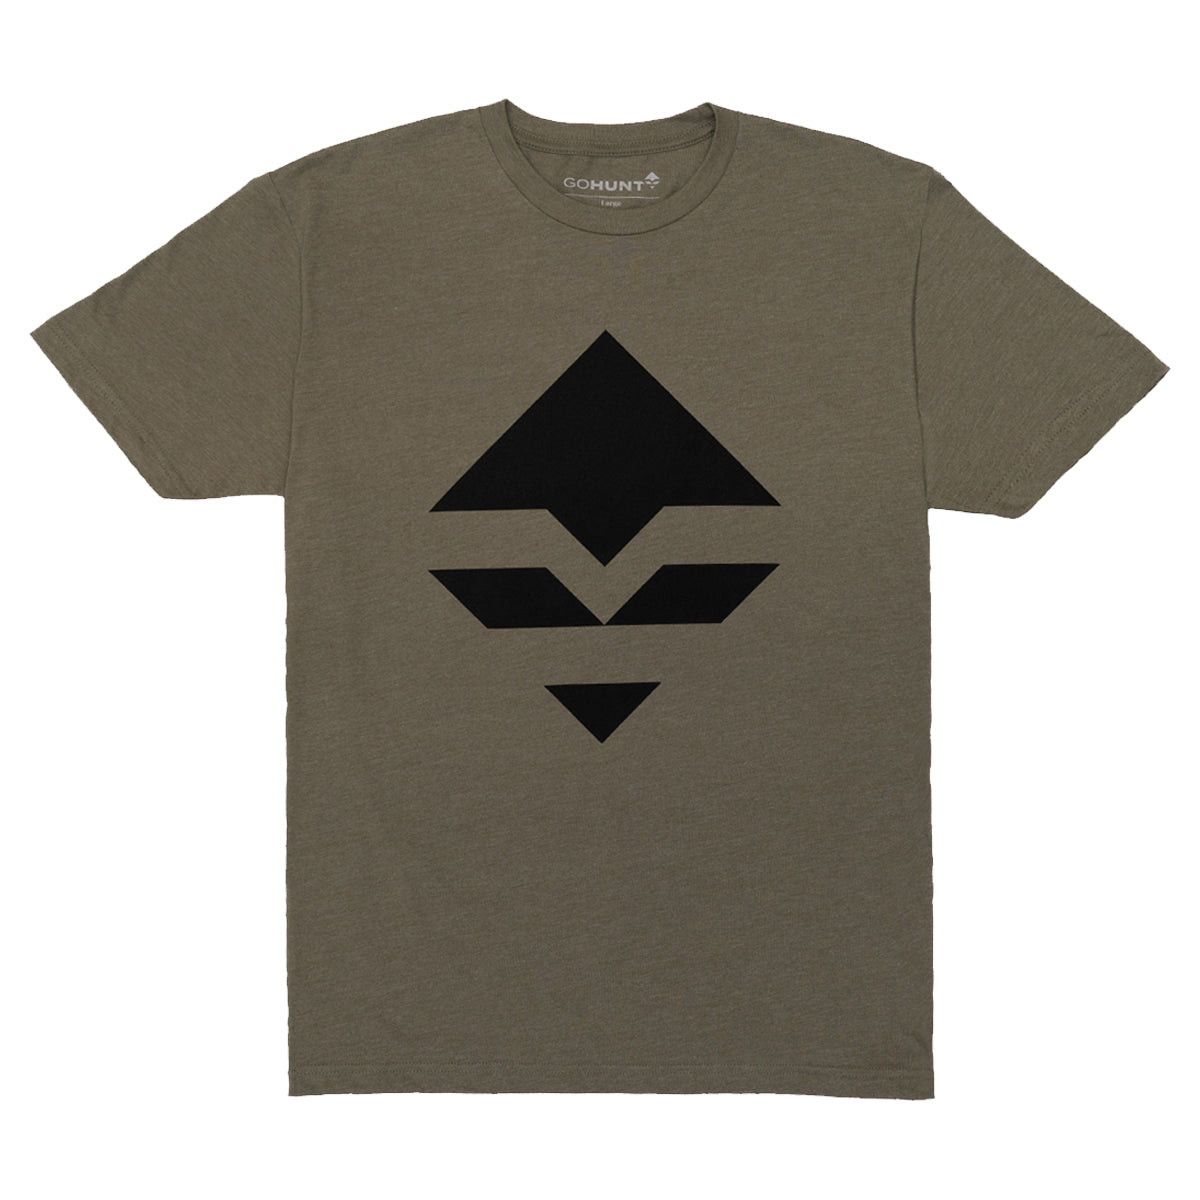 GOHUNT Original T-Shirt in  by GOHUNT | GOHUNT - GOHUNT Shop